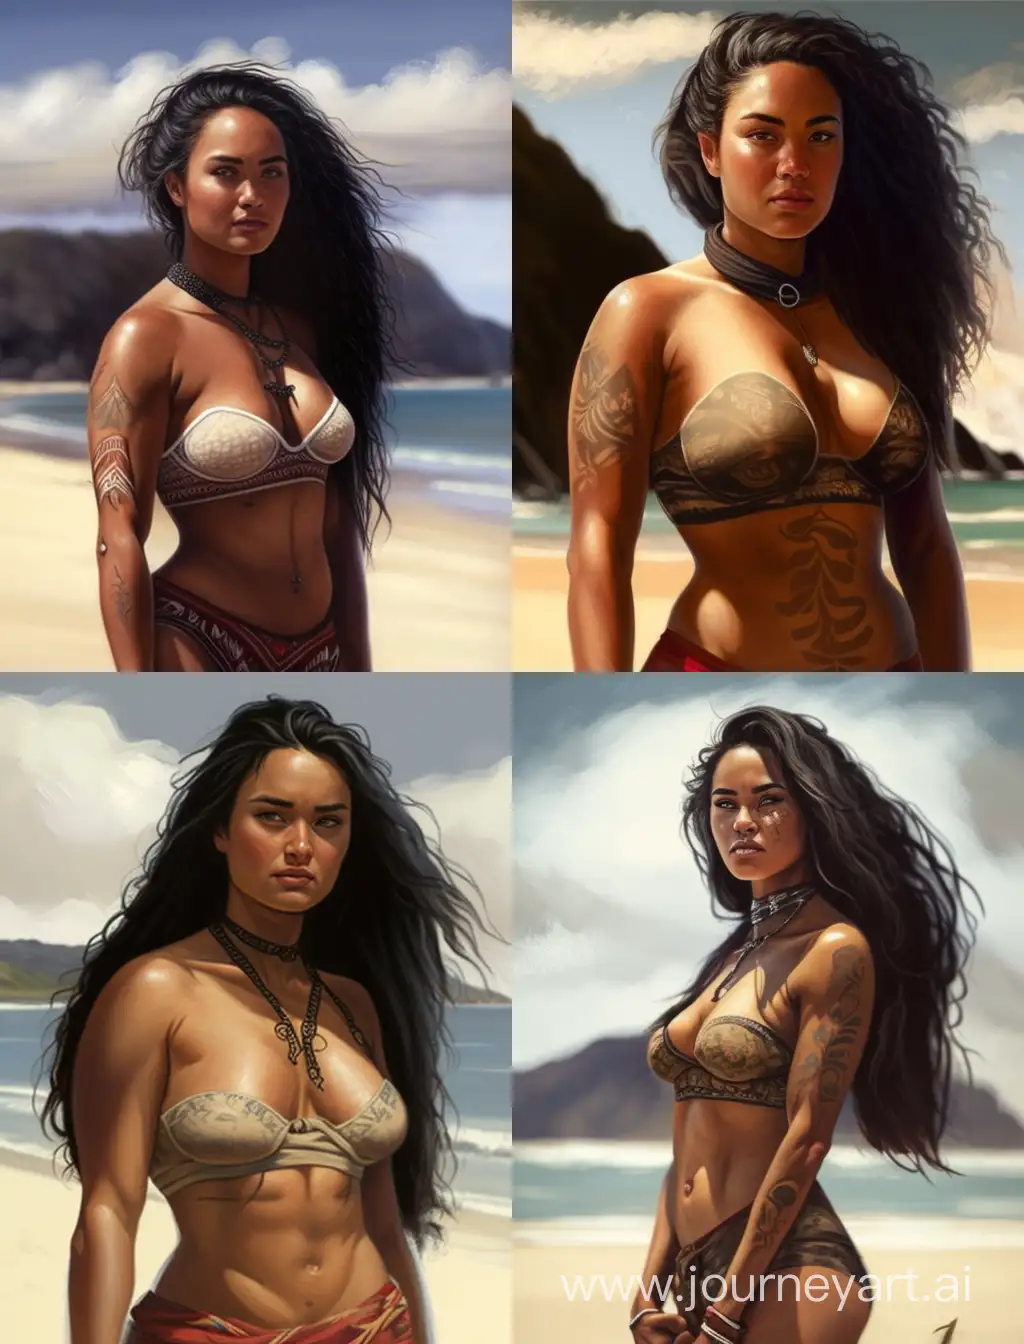 tall attractive maori female, arrogant stance , bikini , beach,